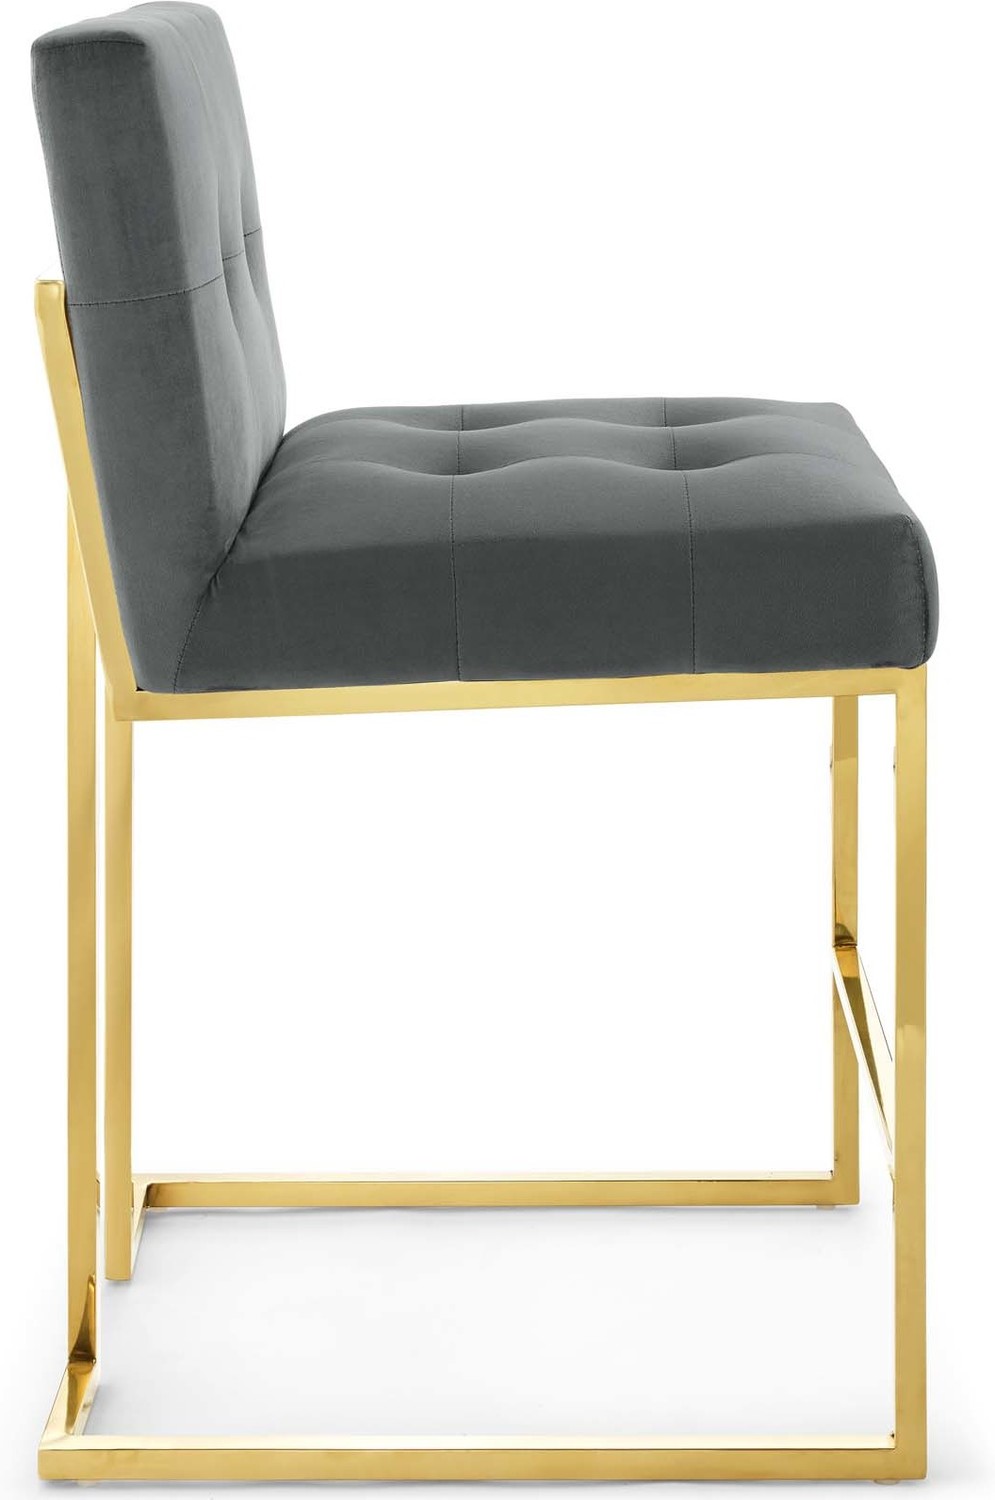 kitchen bar stools set of 4 Modway Furniture Bar and Counter Stools Gold Charcoal